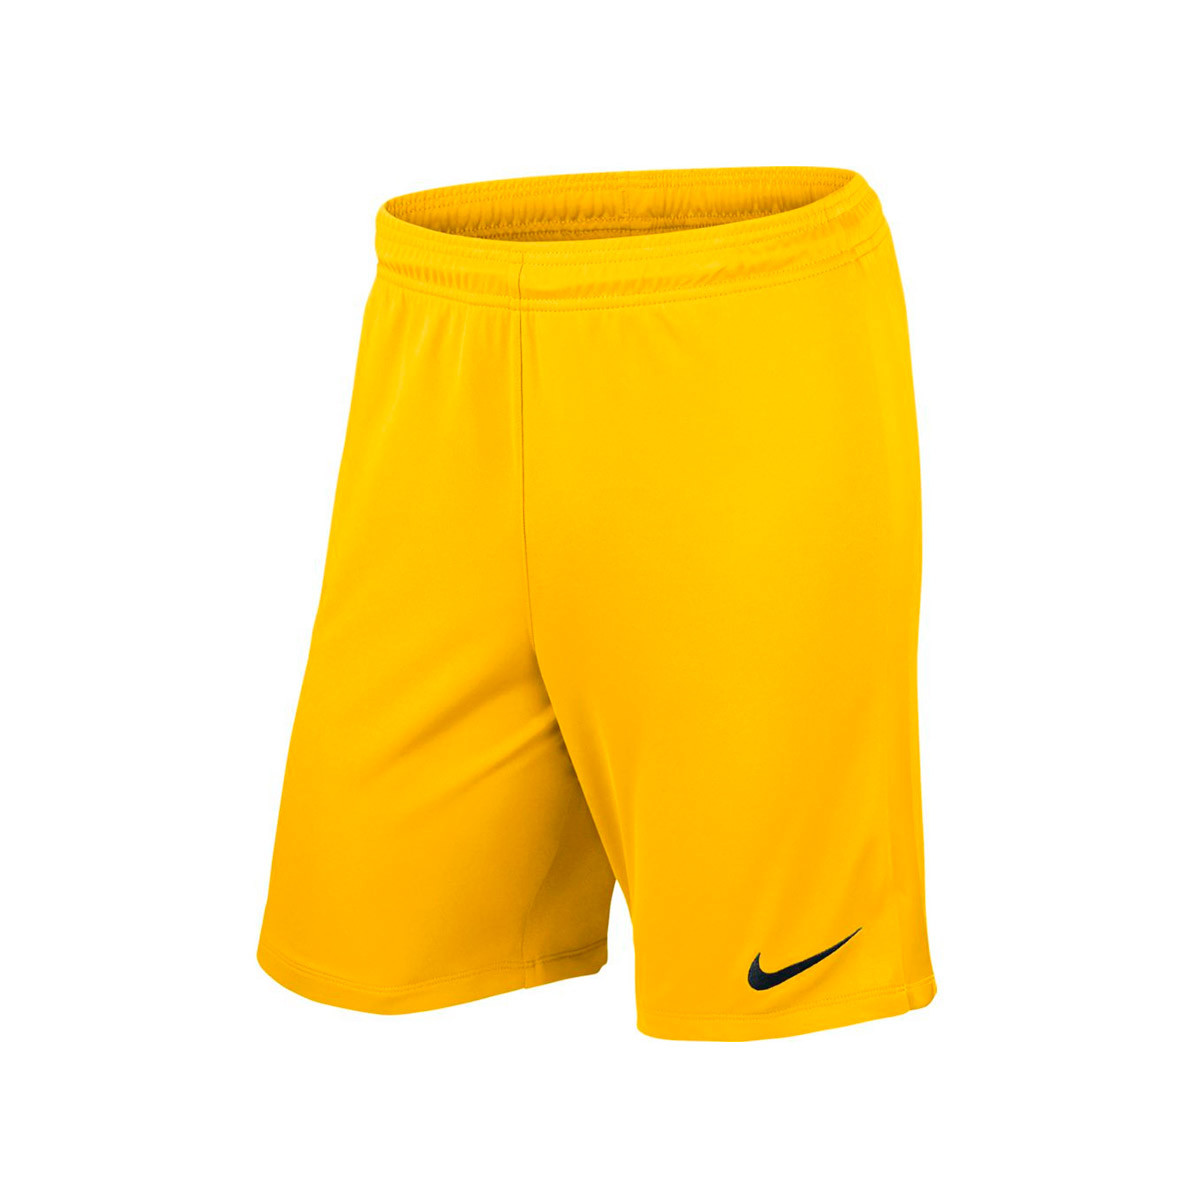 yellow shorts nike cheap online